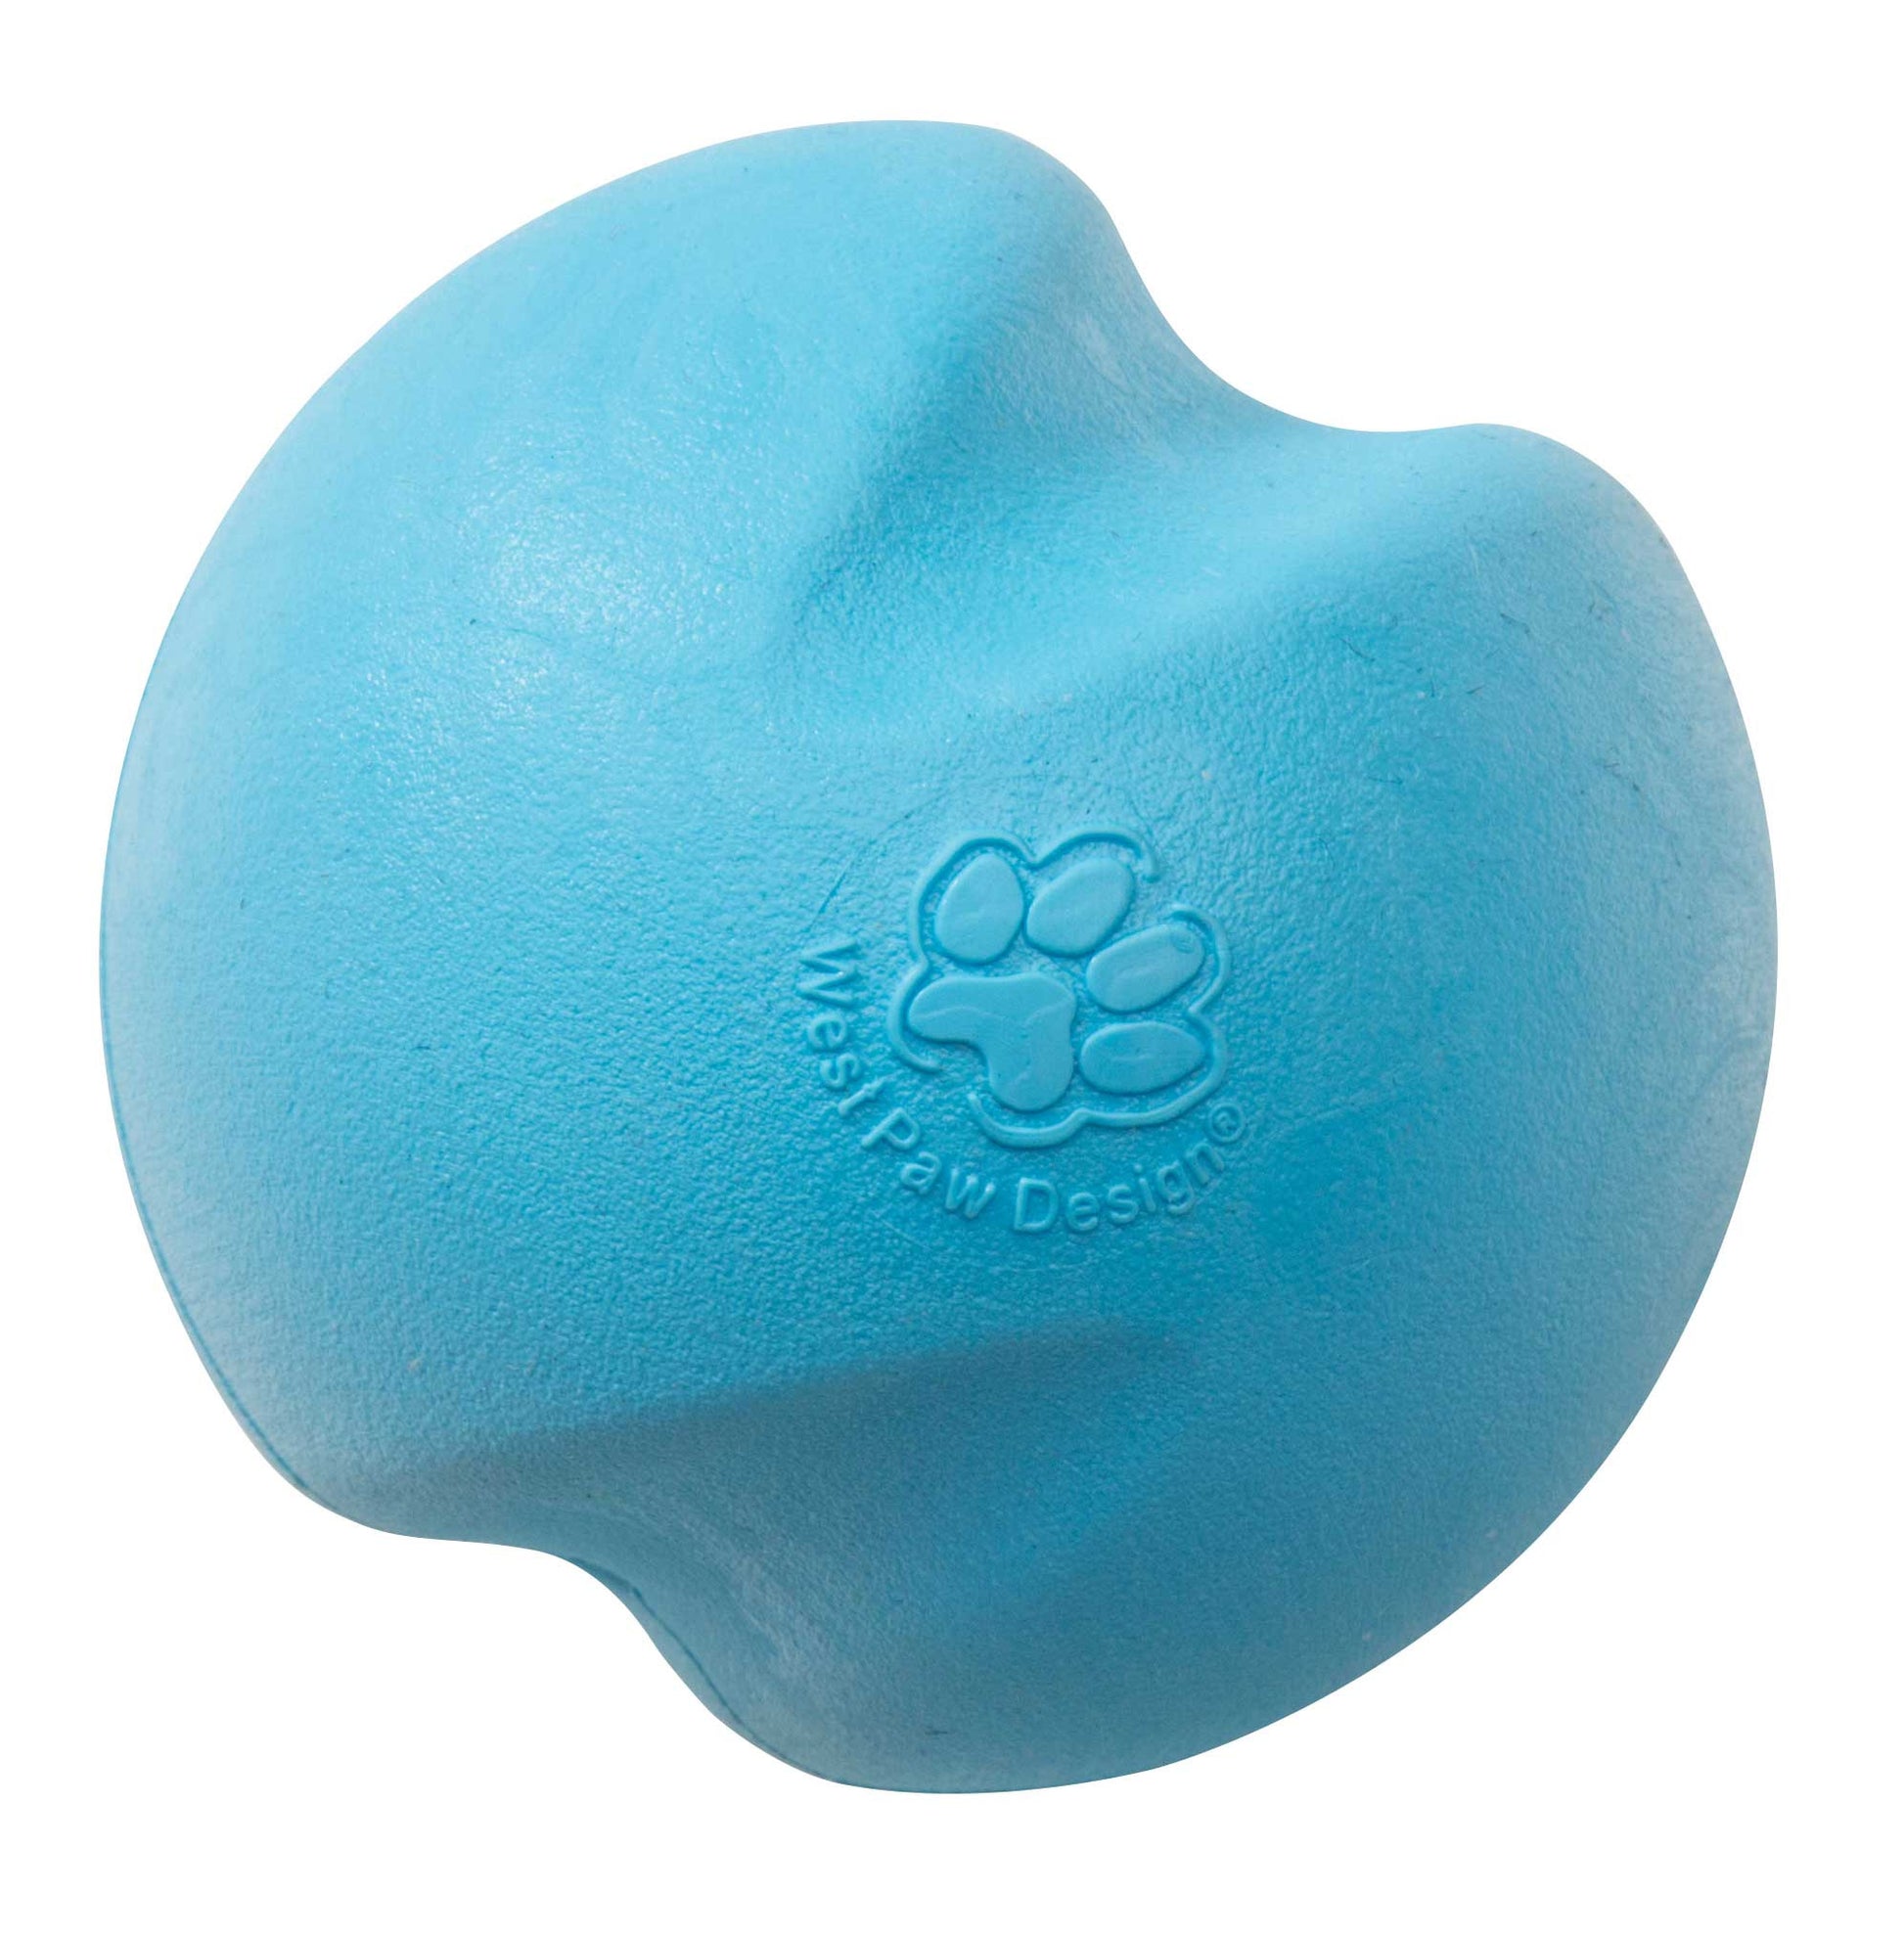 West Paw Hurley Dog Toy - Small - Aqua Blue